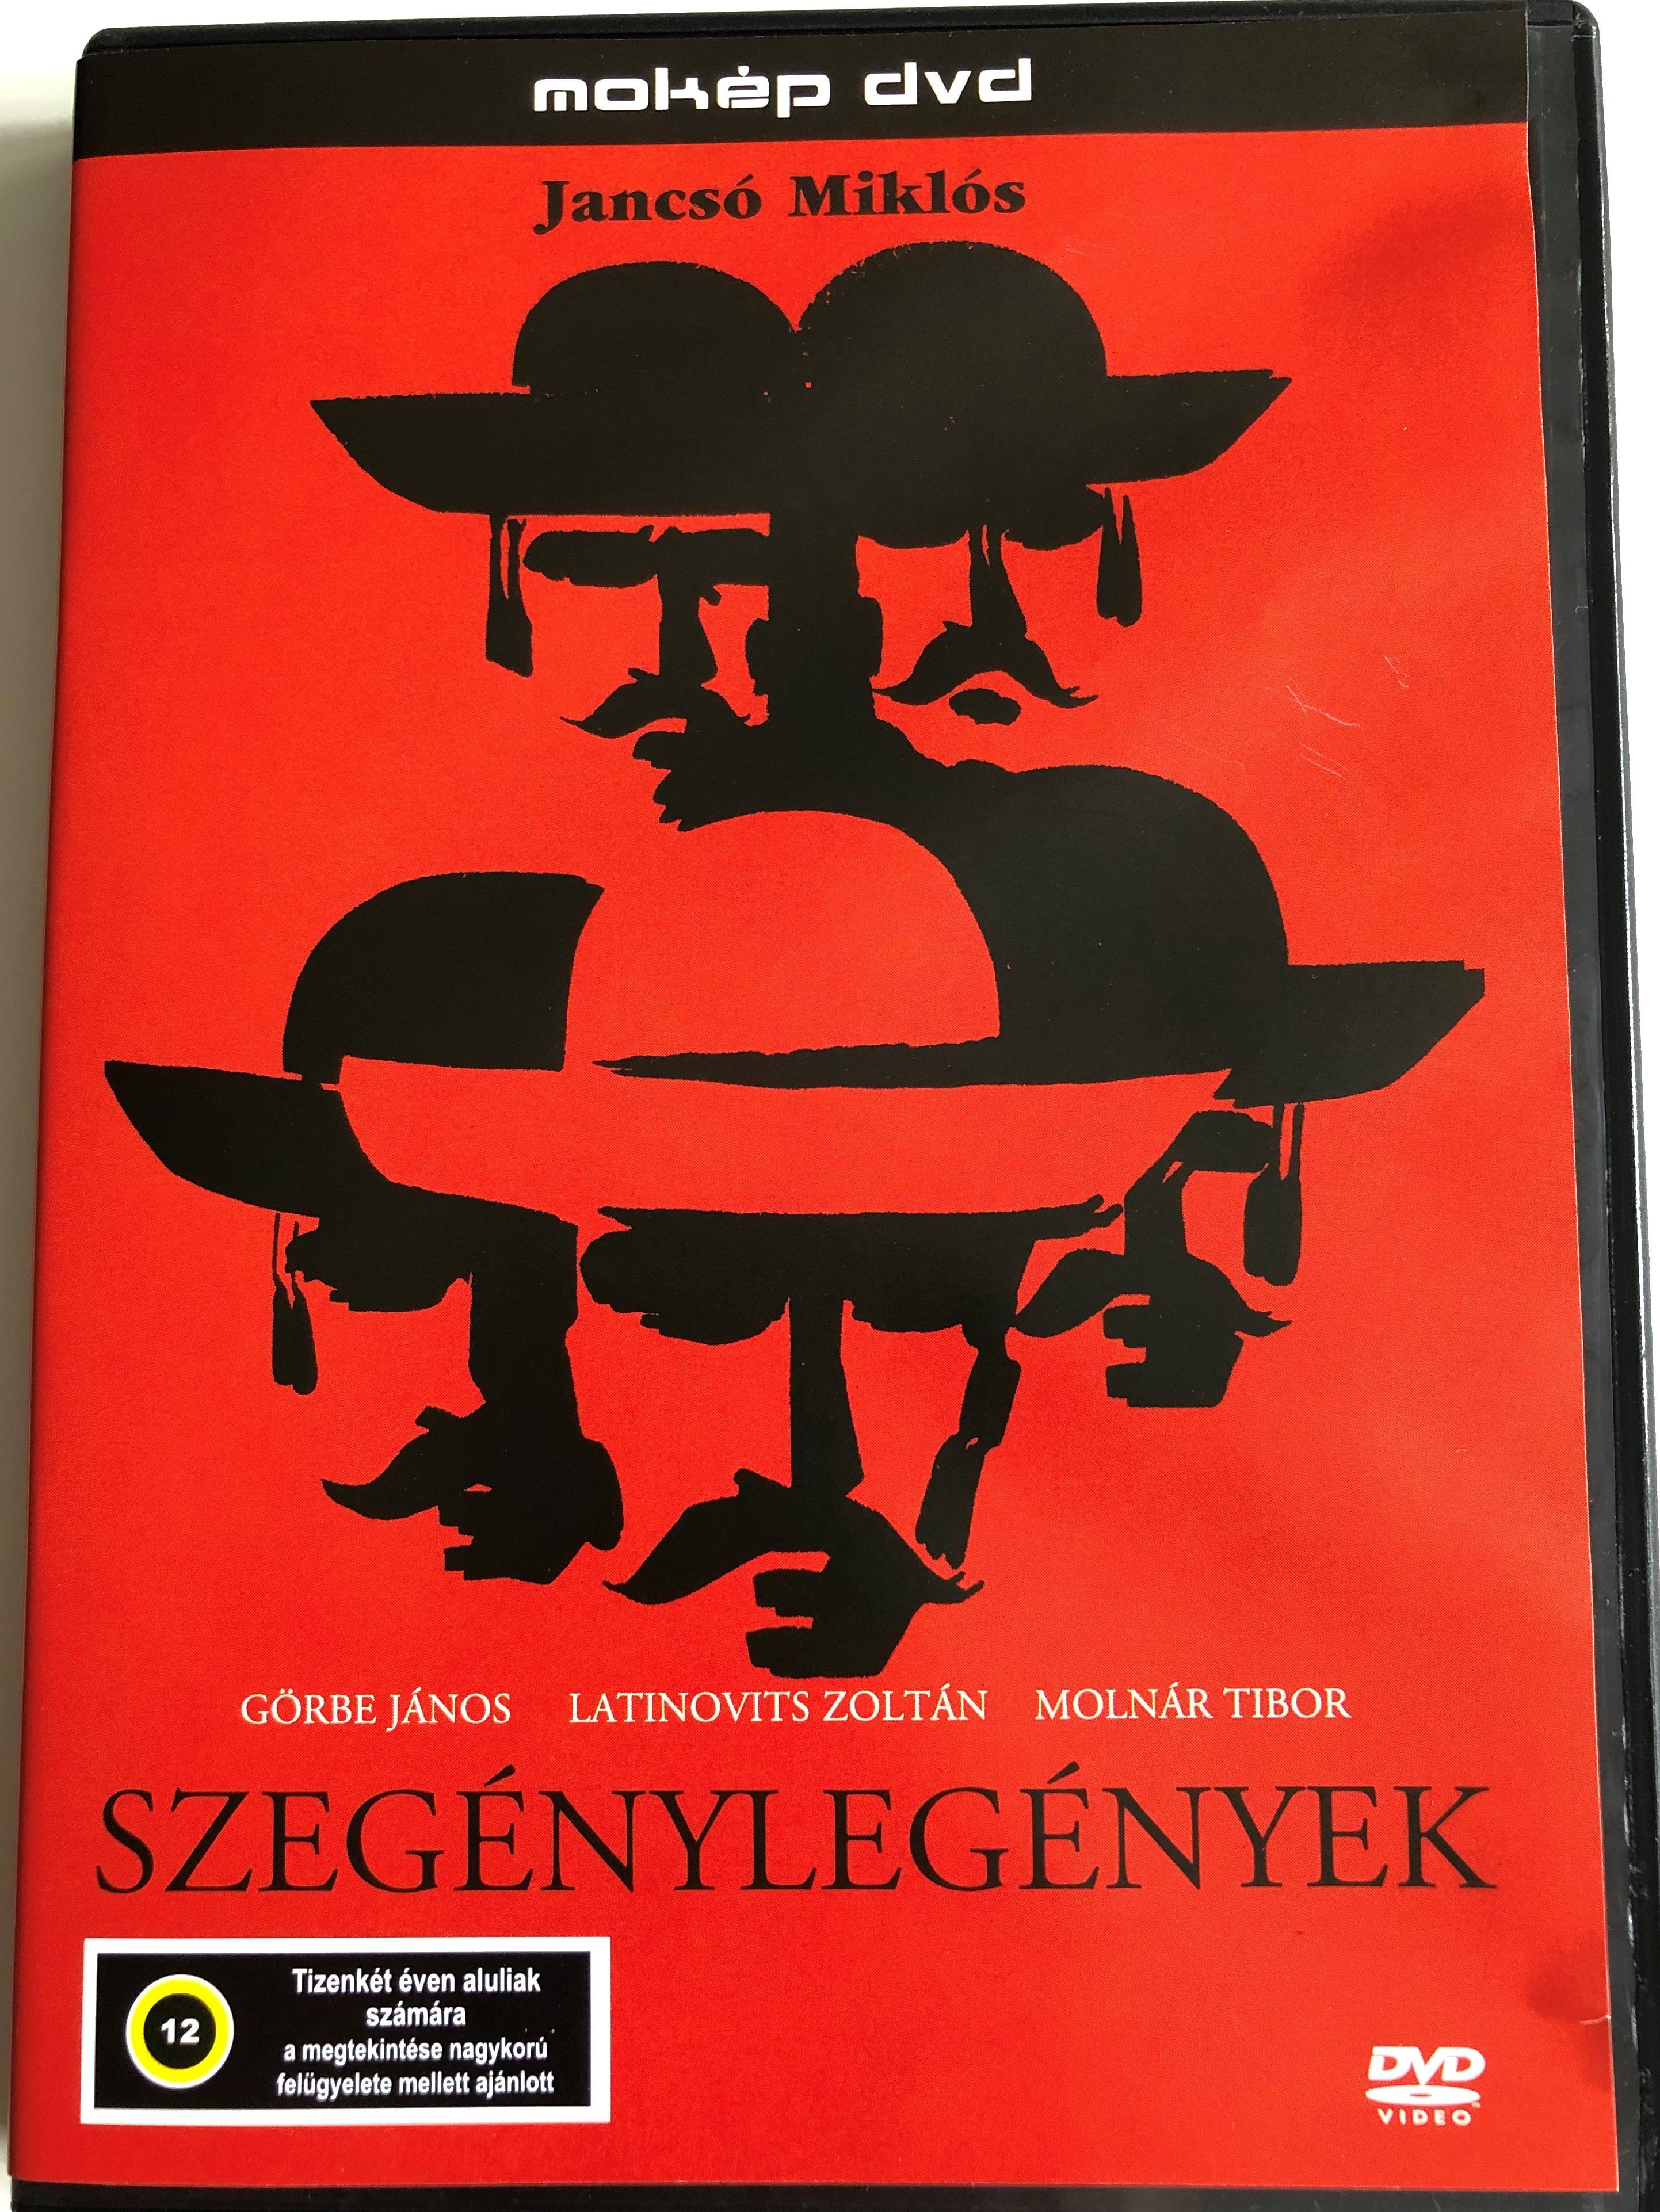 szeg-nyleg-nyek-dvd-1966-the-round-up-directed-by-jancs-mikl-s-starring-j-nos-g-rbe-zolt-n-latinovits-tibor-moln-r-1-.jpg